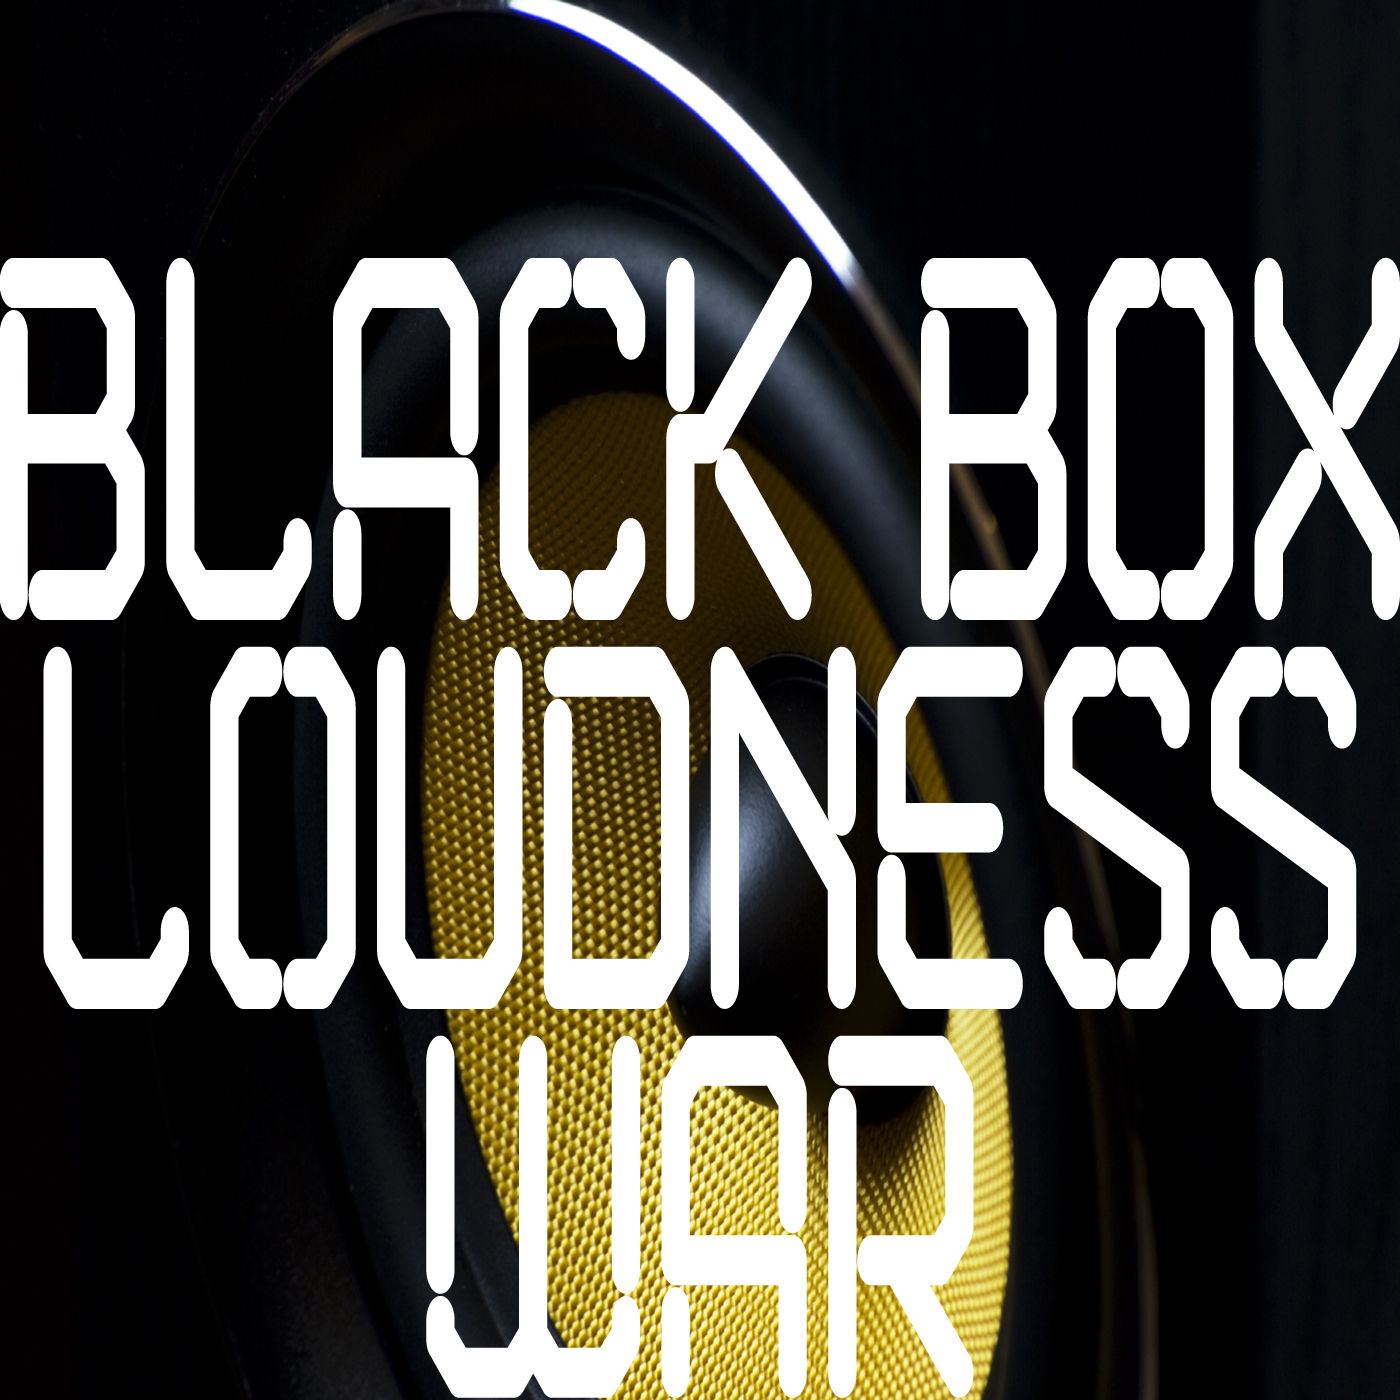 BLACK BOX - Loudness war(신남, 격렬, 진지, 비트, 즐거움, 흥겨움, 발랄, 클럽, 흥함, 활기, 행복, 당당, 경쾌, 일렉)